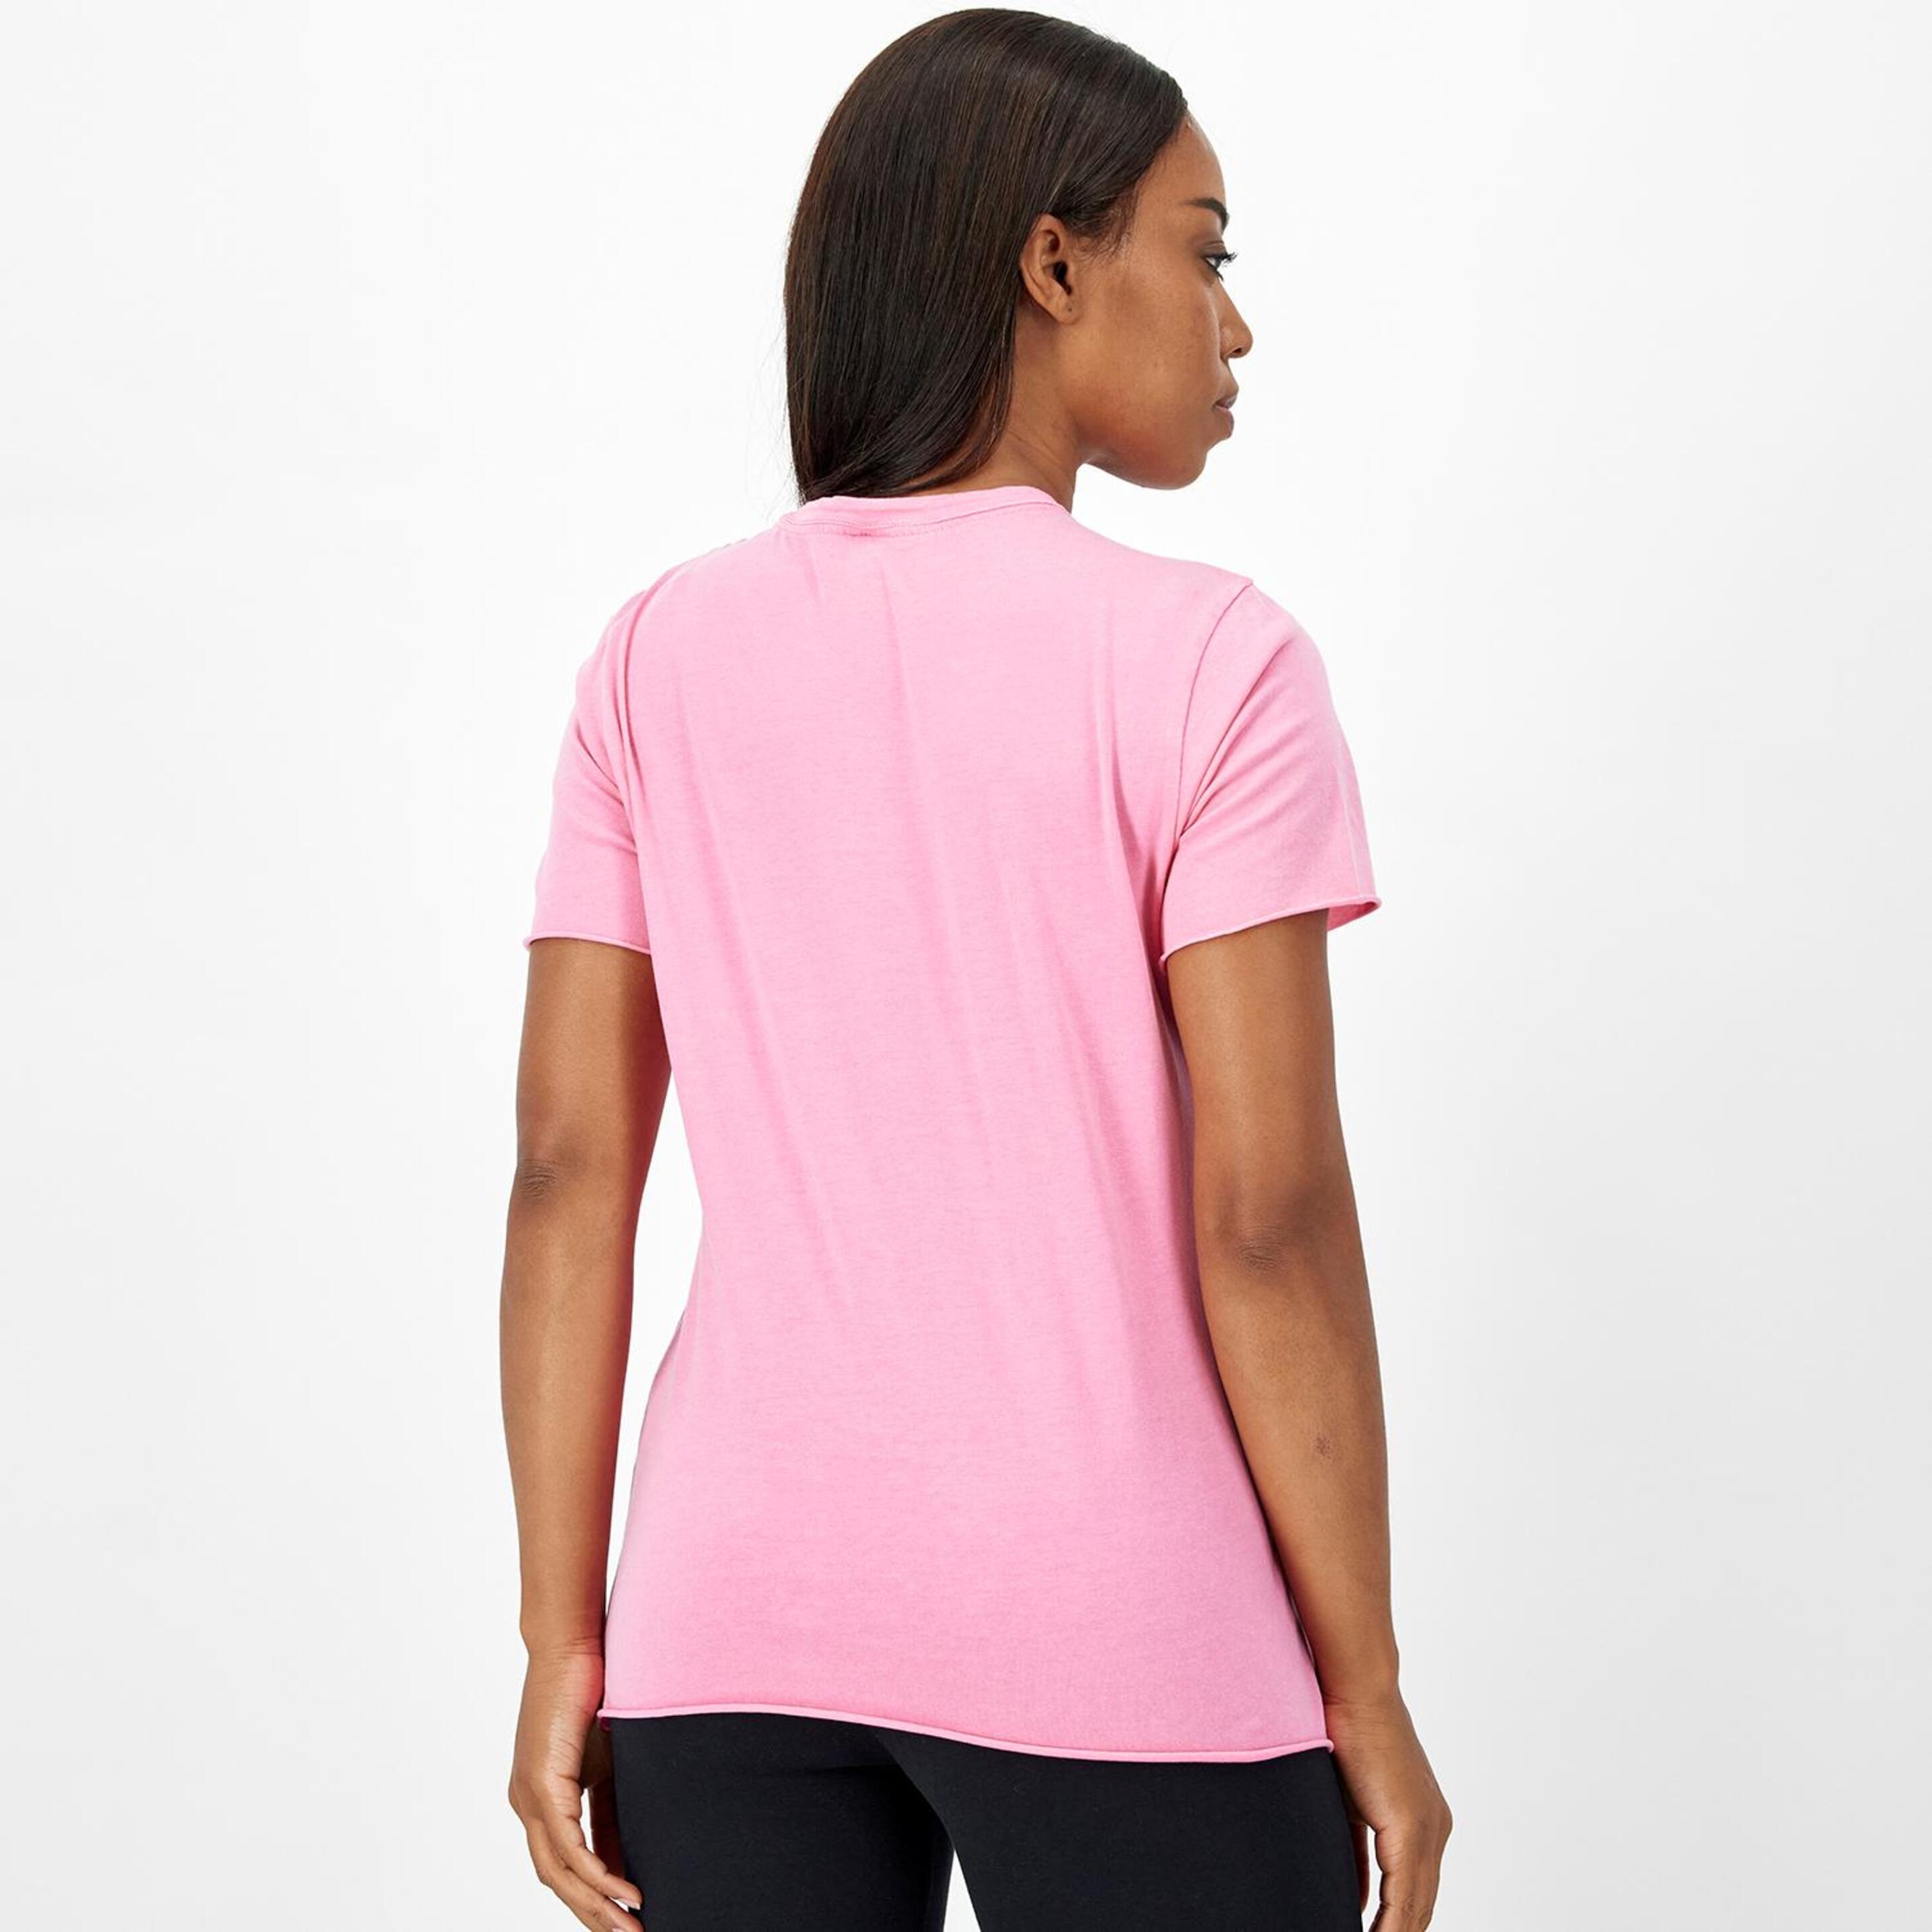 Only Brave Print - Rosa - Camiseta Mujer